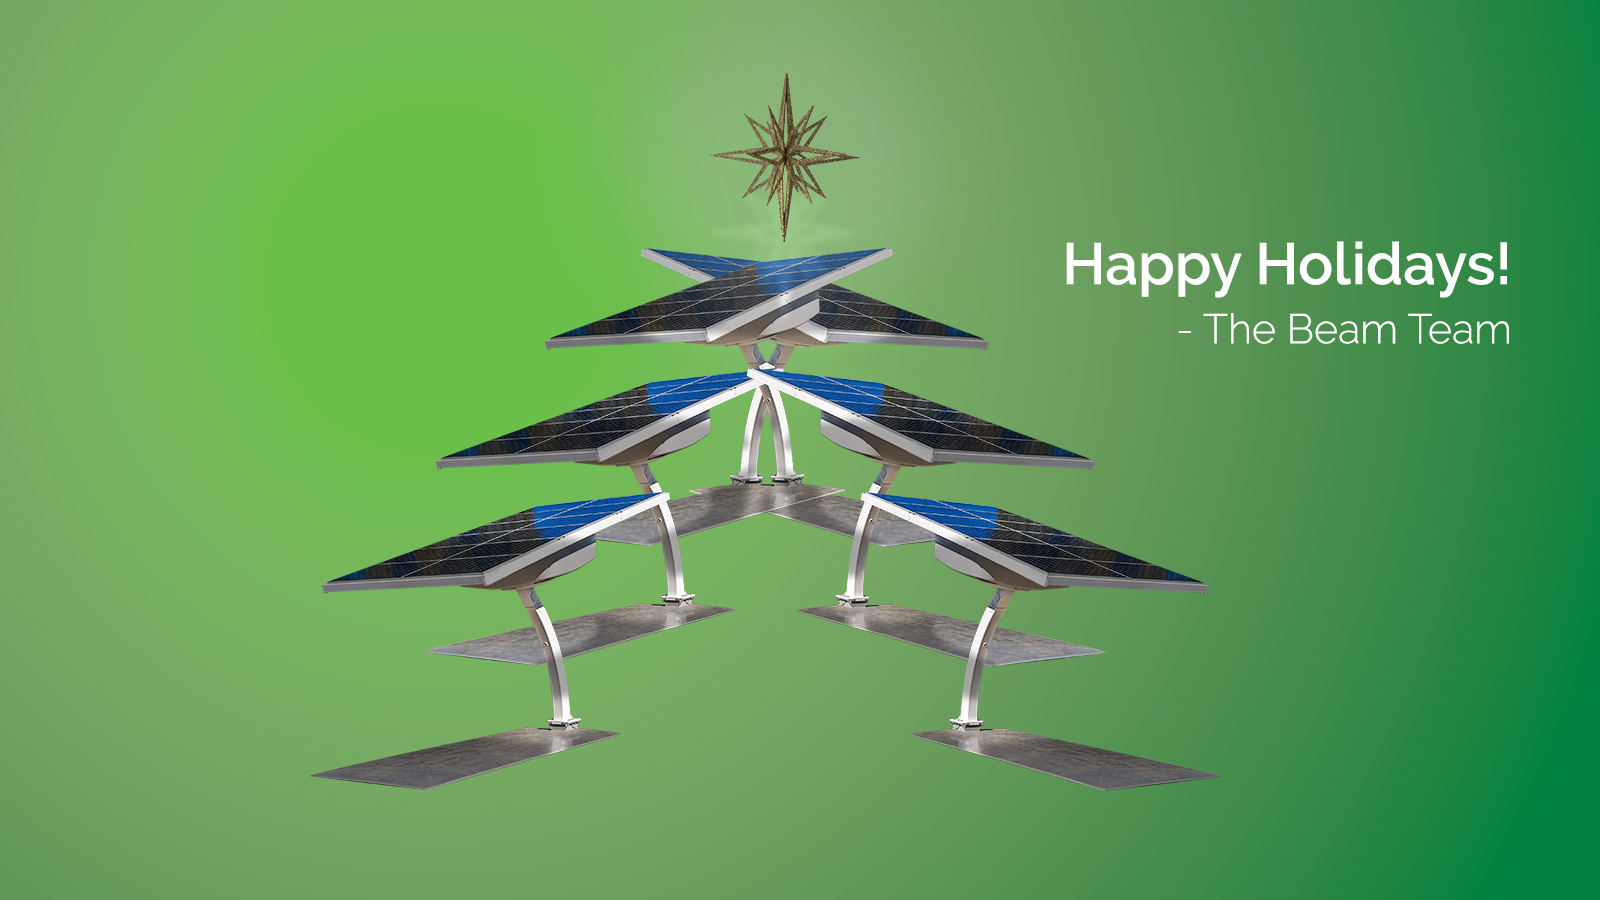 Beam Global Wishing You a Joyous, Safe and Peaceful Holiday Season